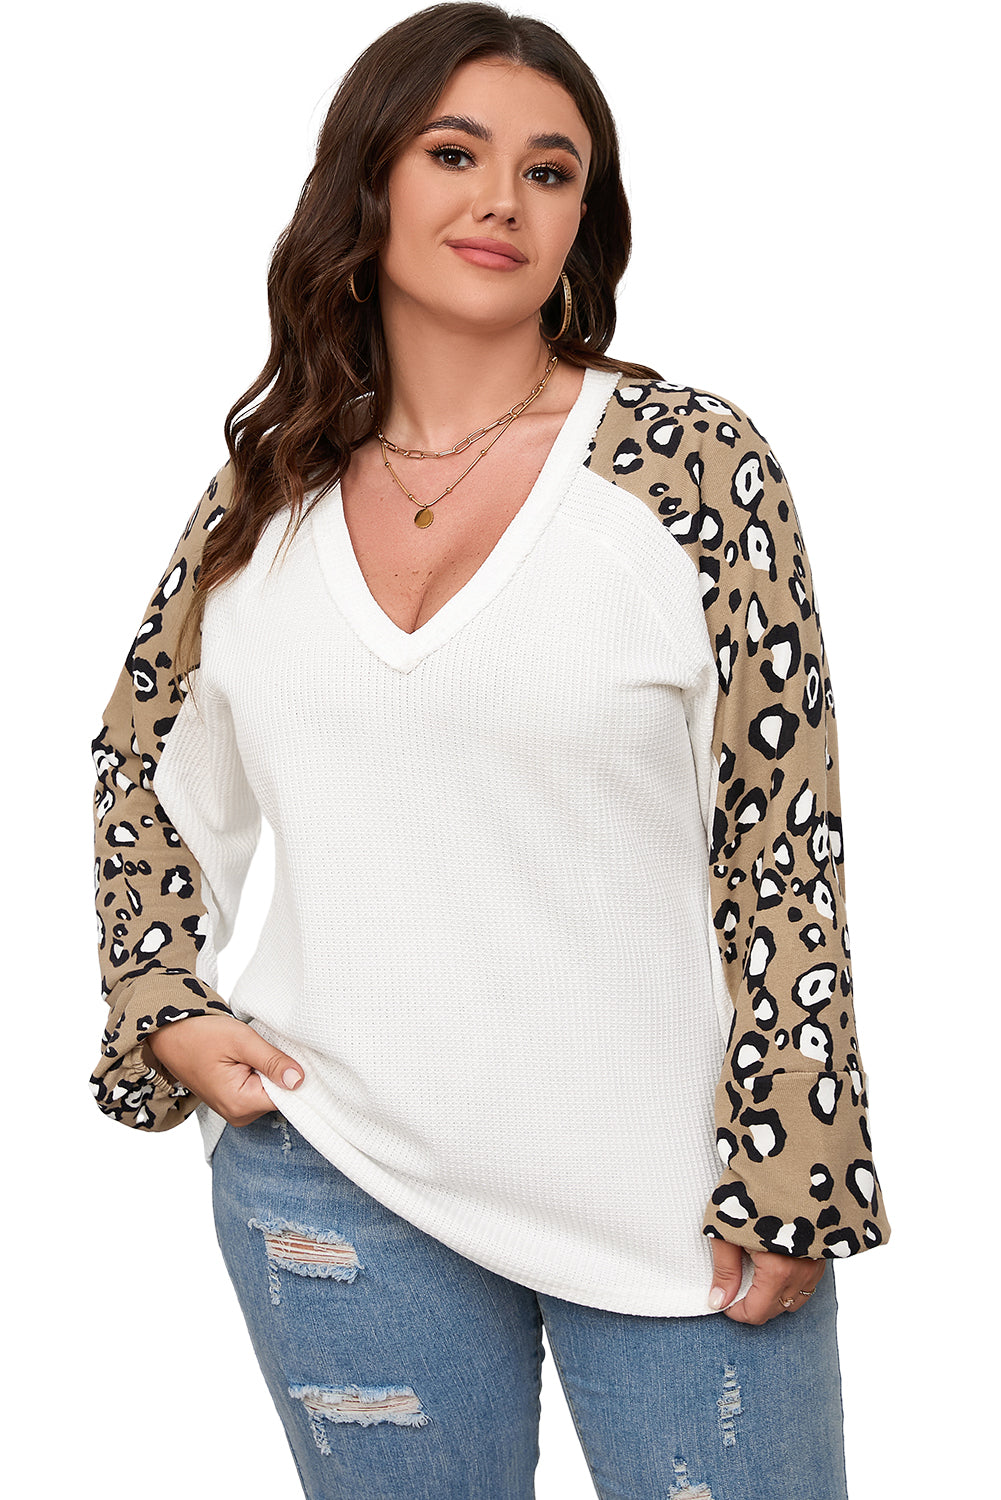 Beige Printed Plus Size Waffle Knit Contrast Leopard Long Sleeve Top